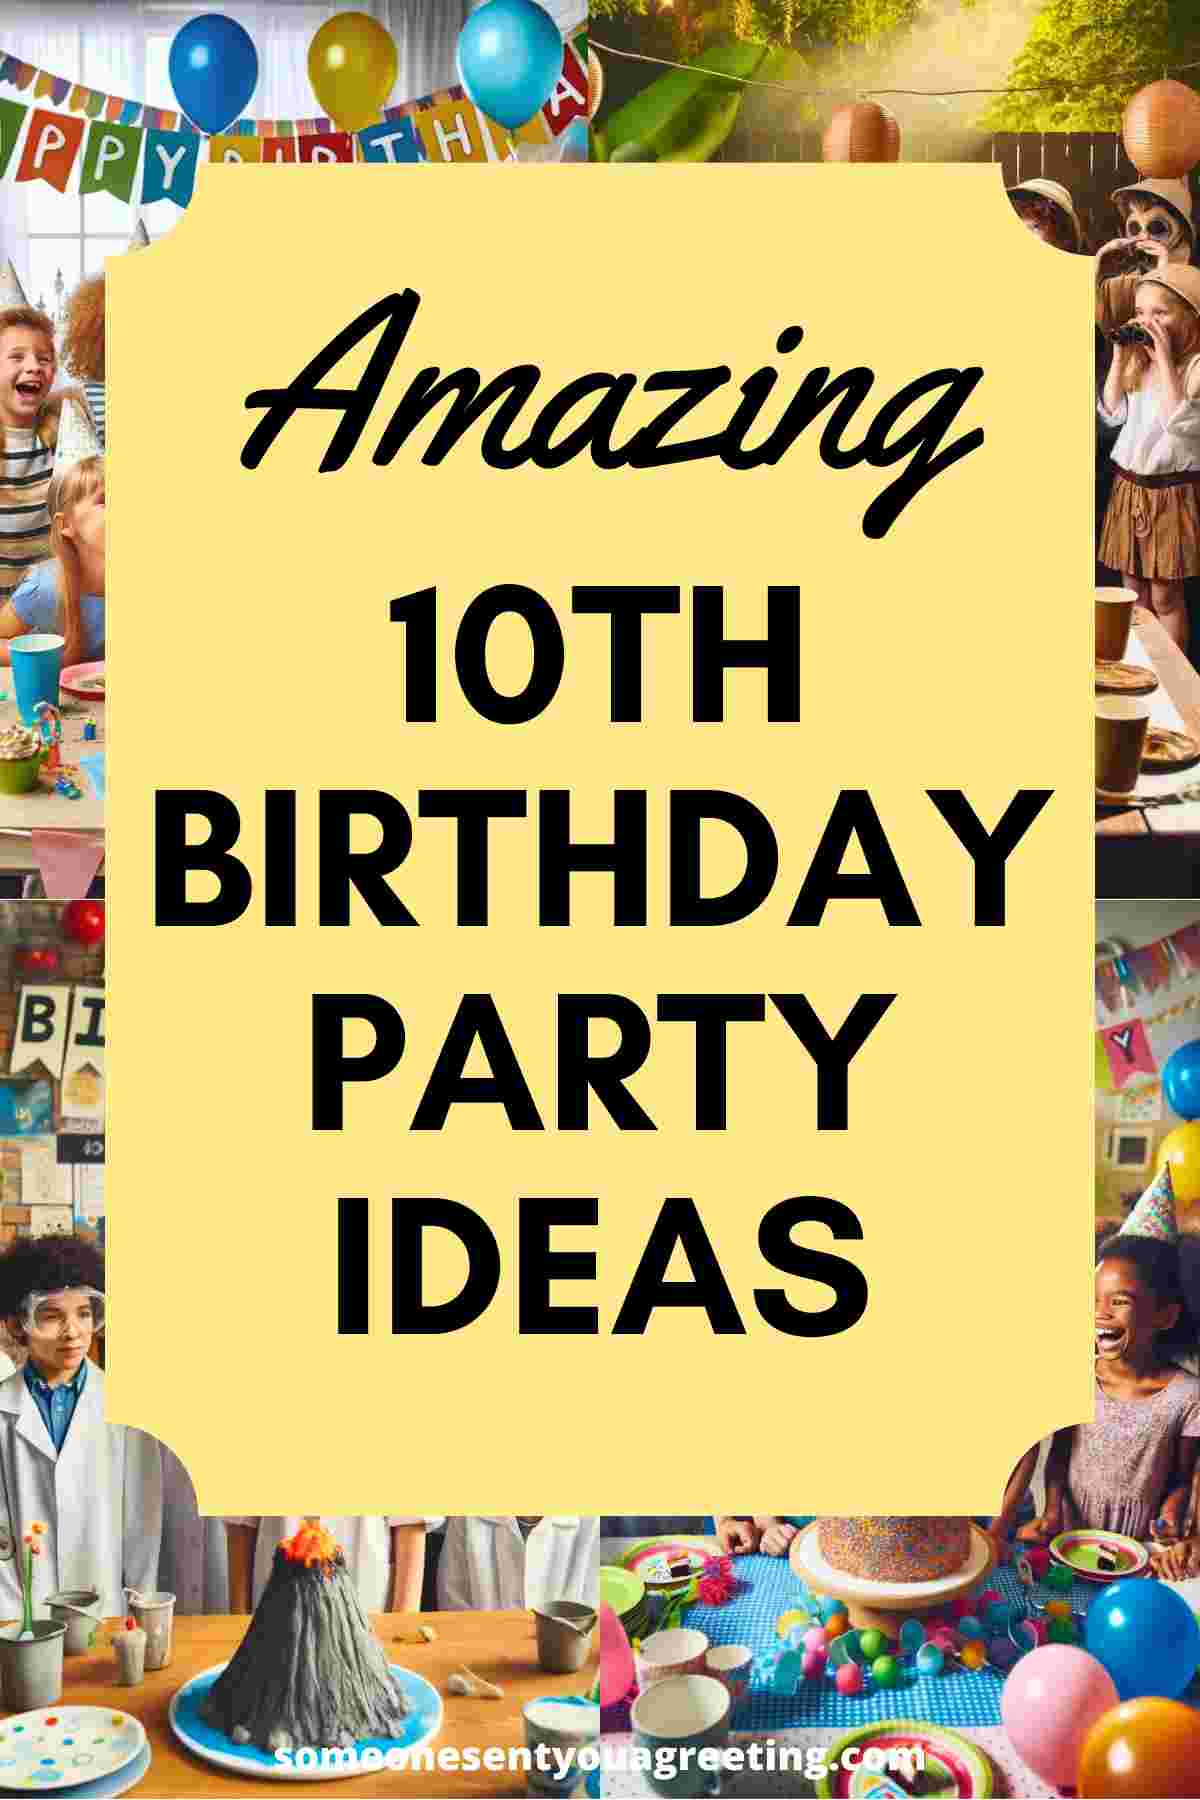 10th birthday party ideas